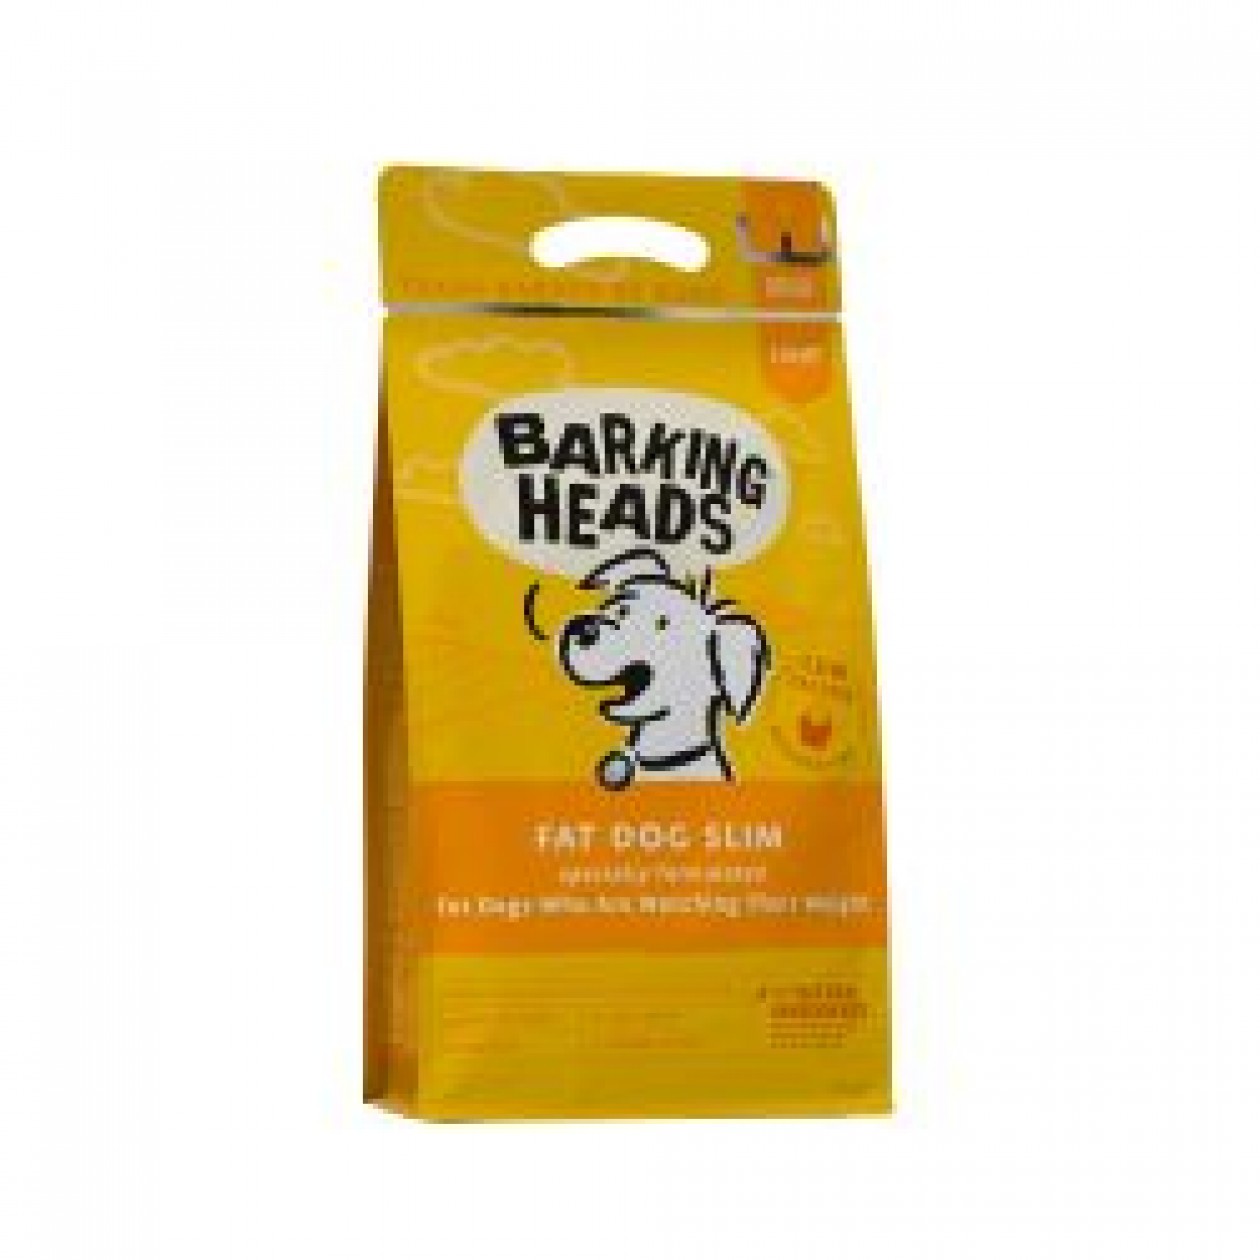 Barking Heads Fat Dog Slim, 2kg